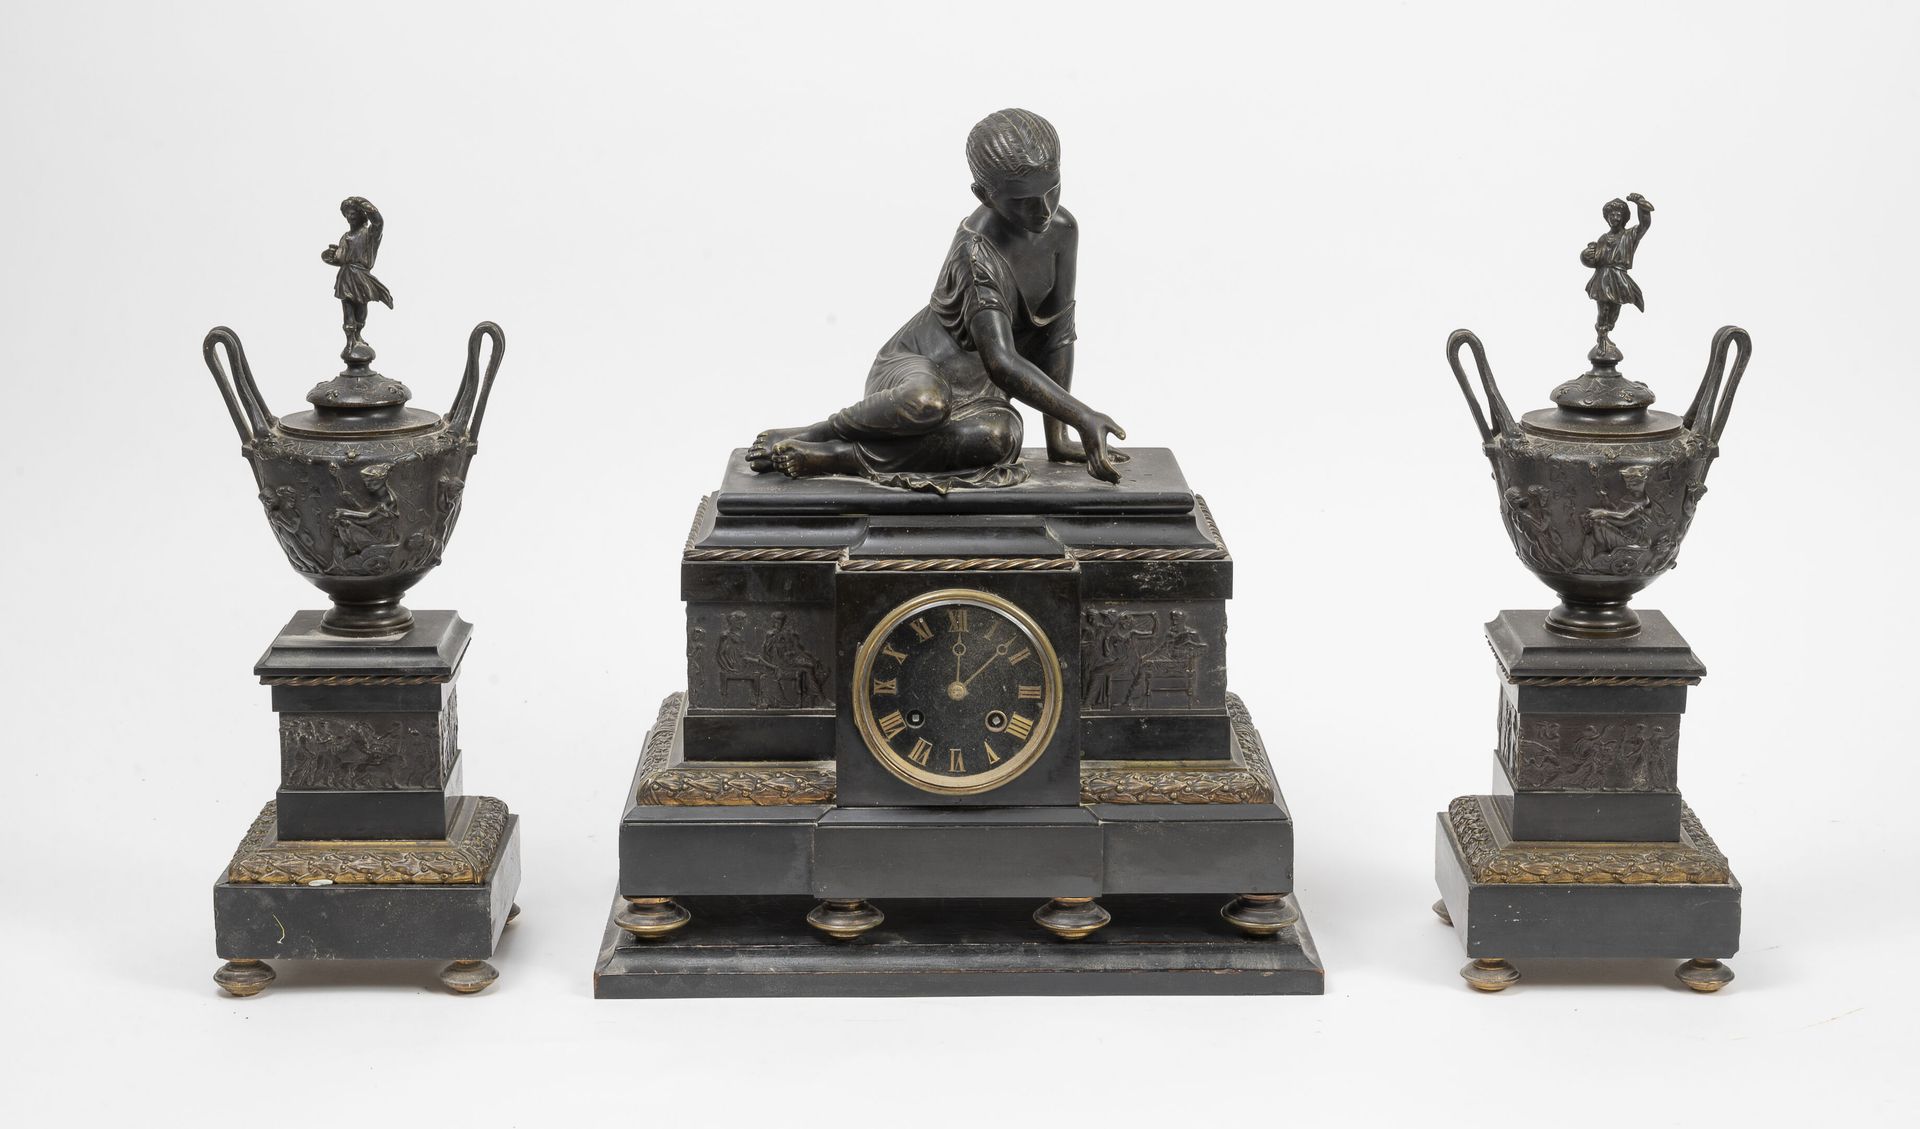 FRANCE, fin du XIXème siècle 一套镀铜或鎏金的青铜和黑色大理石壁炉，包括:

- 一个带有骨质播放器的时钟，上面装饰着仿古风格的人物&hellip;